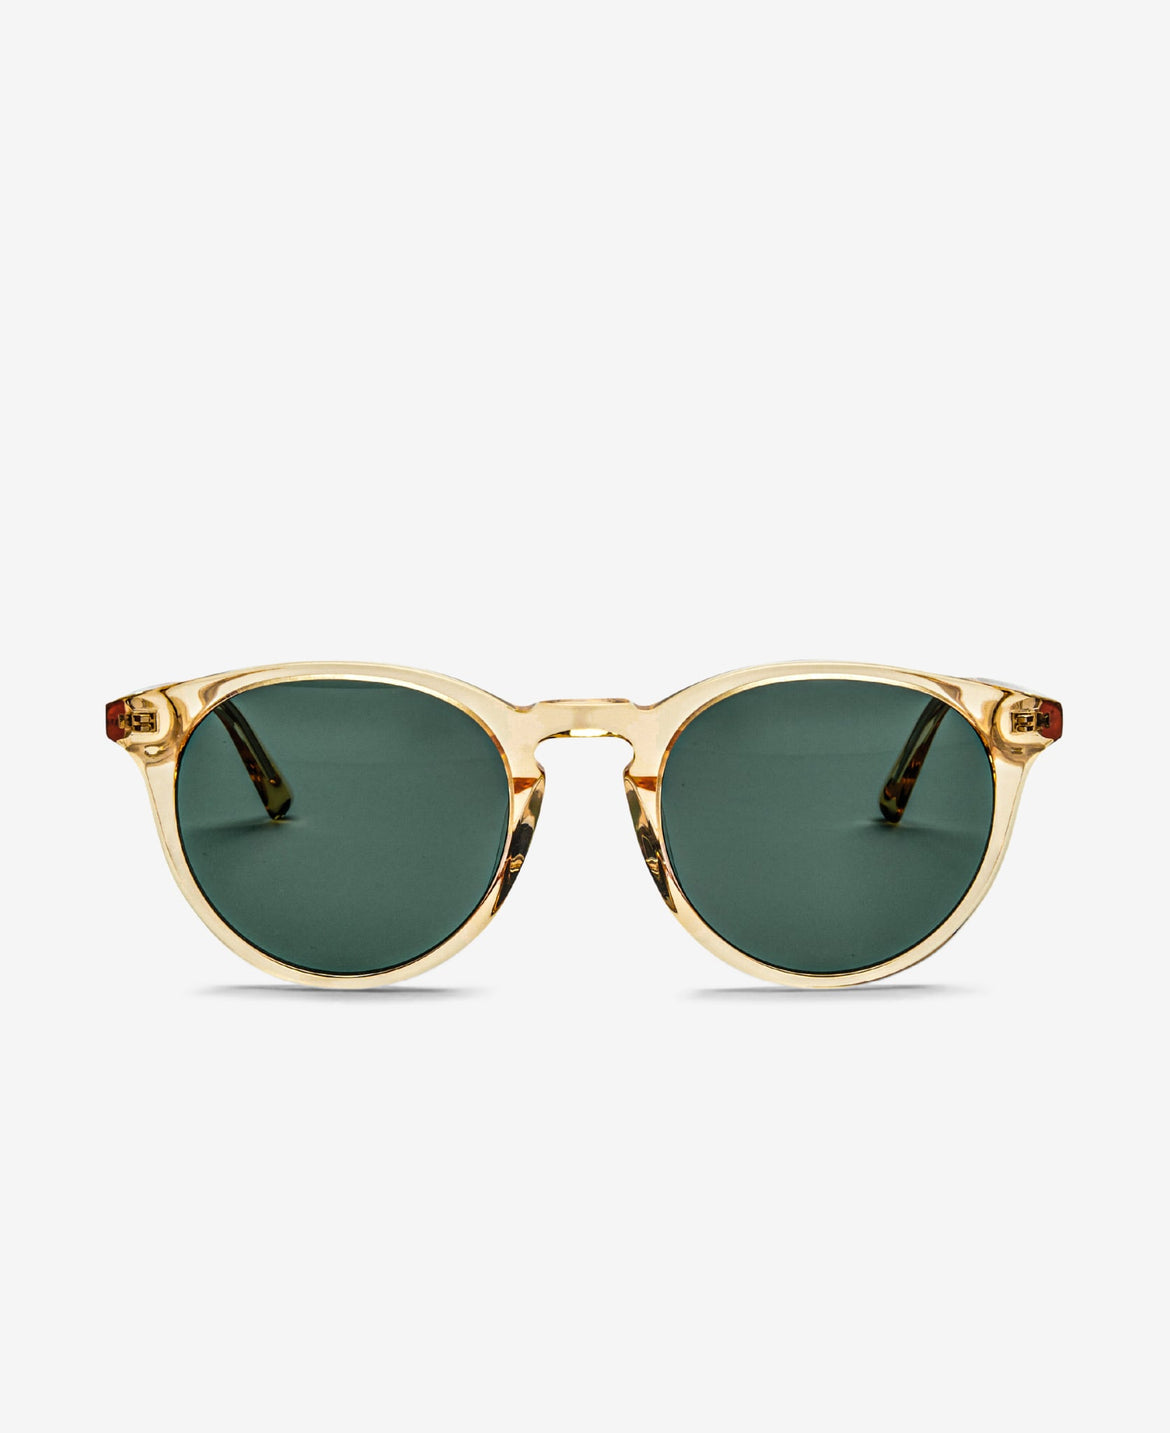 New Depp Champagne Green Sunglasses